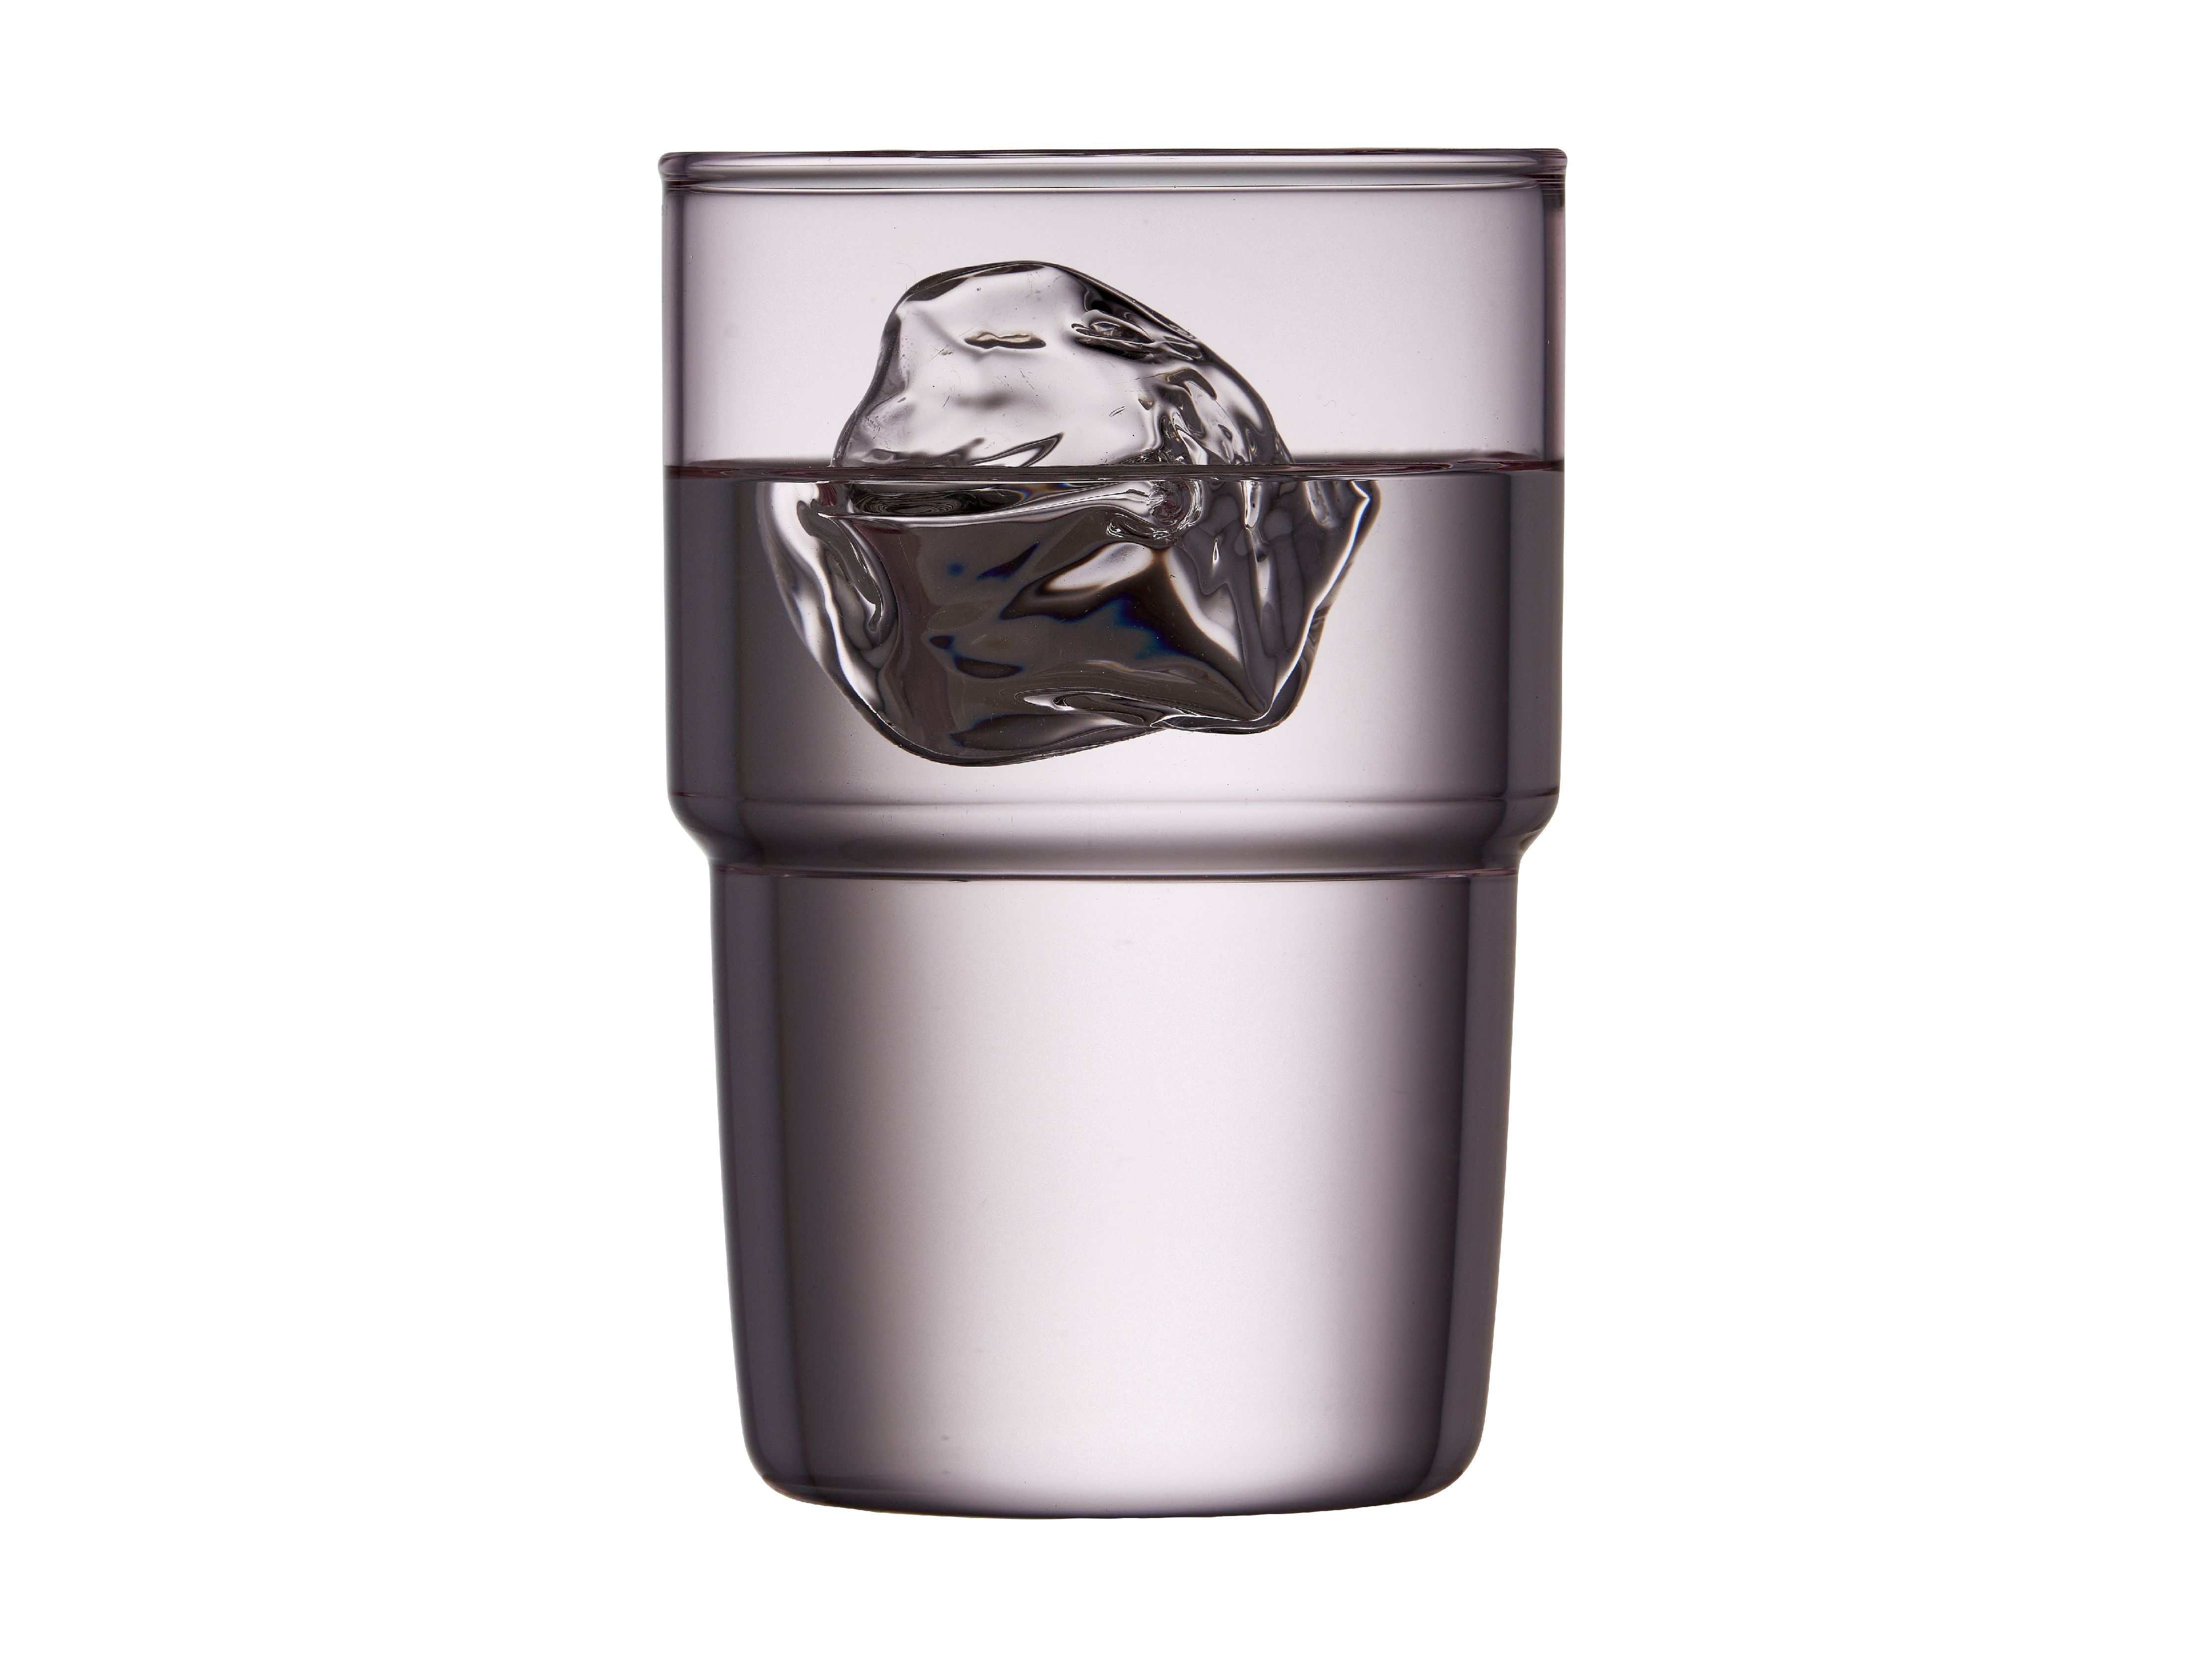 Lyngby Glas Torino Drink Glass 40 Cl 2 stk, lyserød